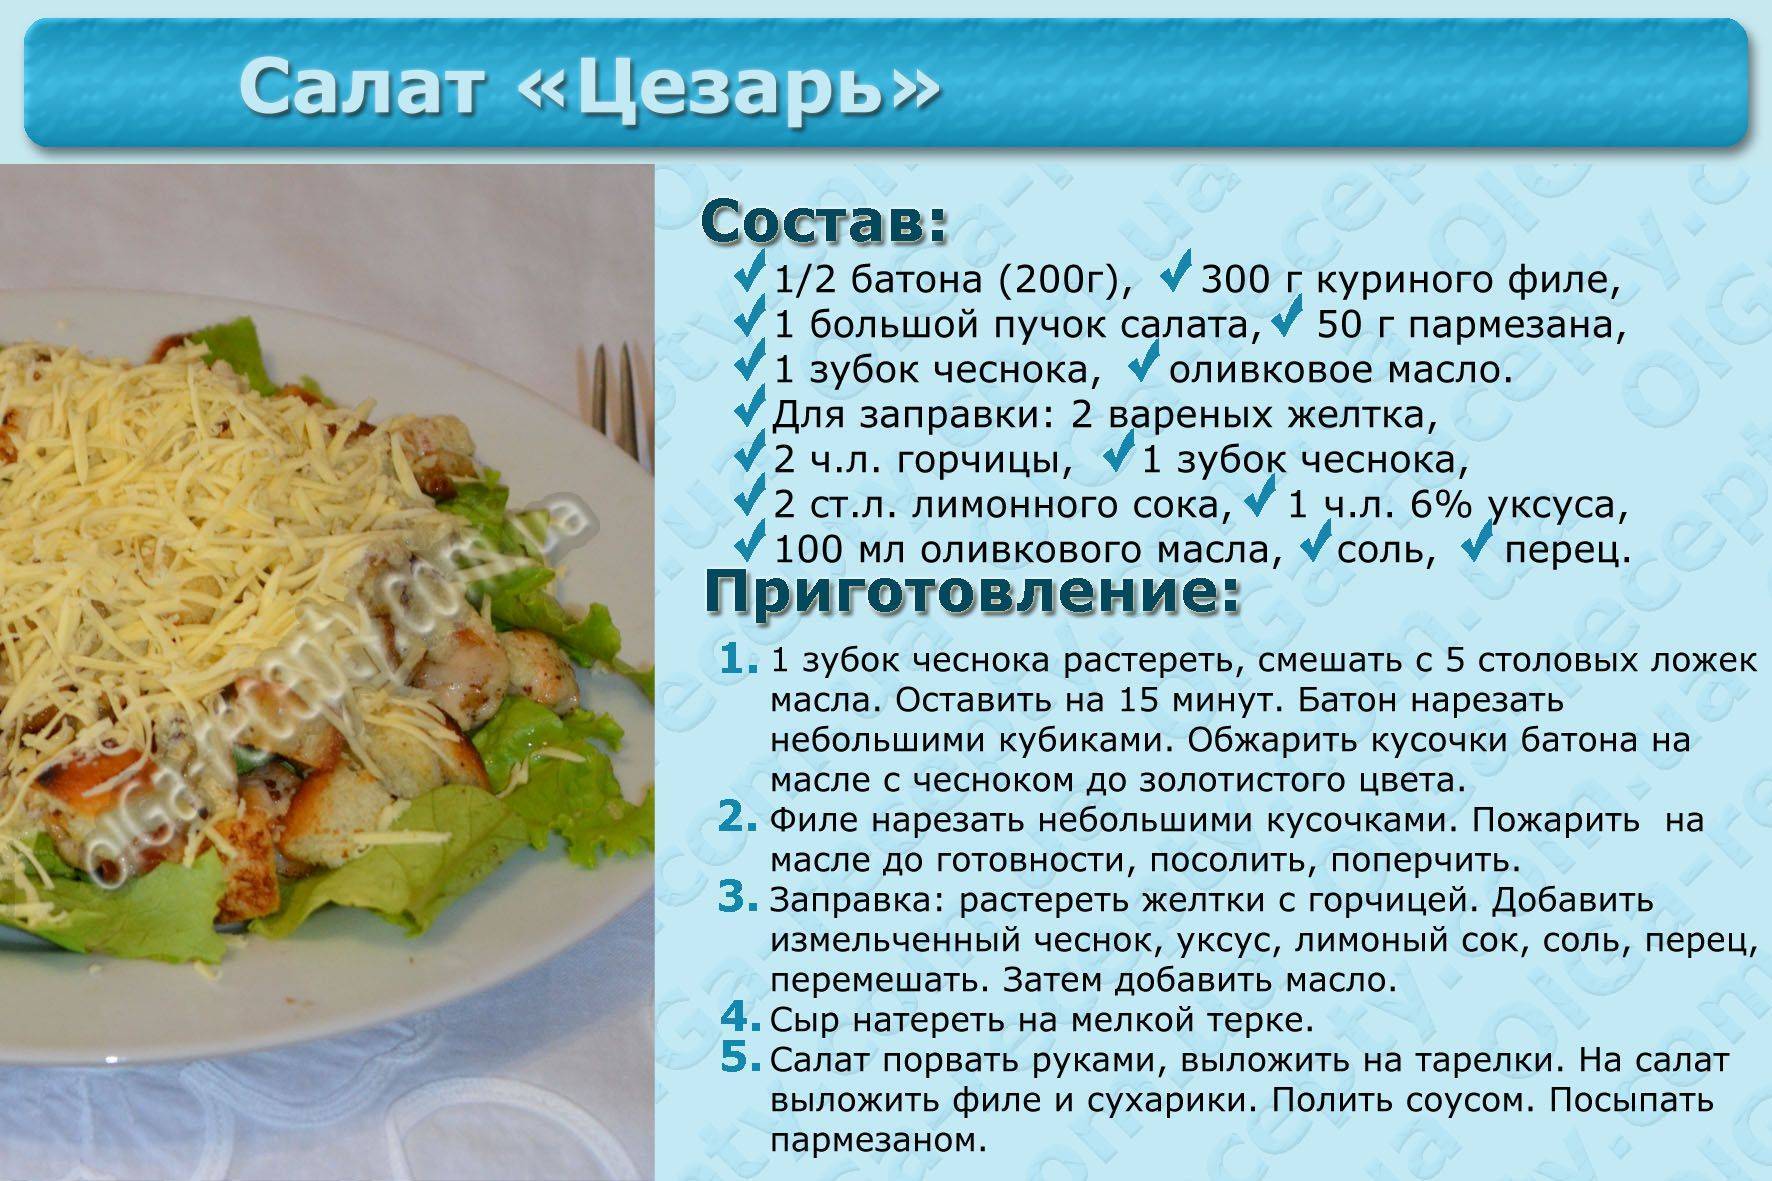 Салат цезарь с курицей - готовим салат цезарь по классическим рецептам в домашних условиях с фото